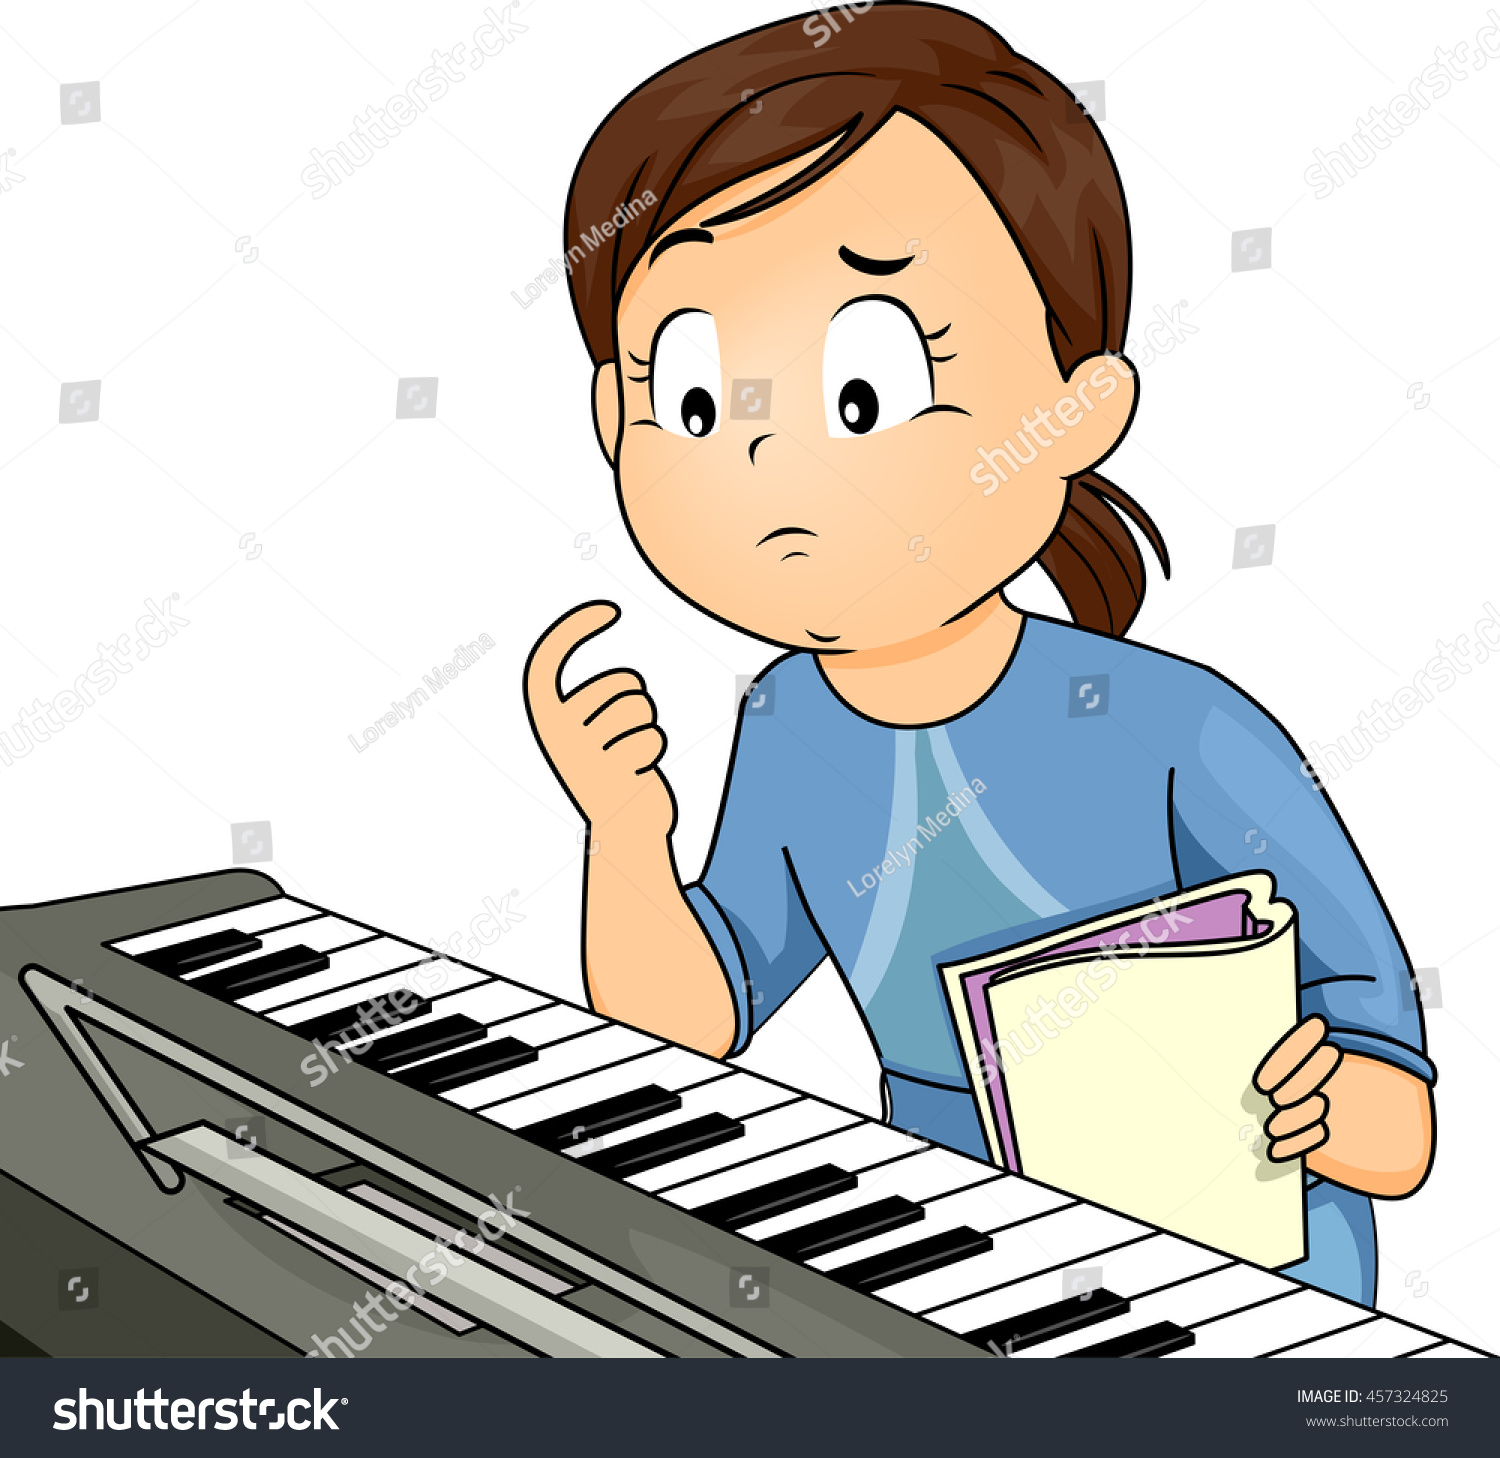 He can play piano. Пианист мультяшное. Пианист мультяшная. Пианист мультяшный. Мальчик пианист мультяшный.